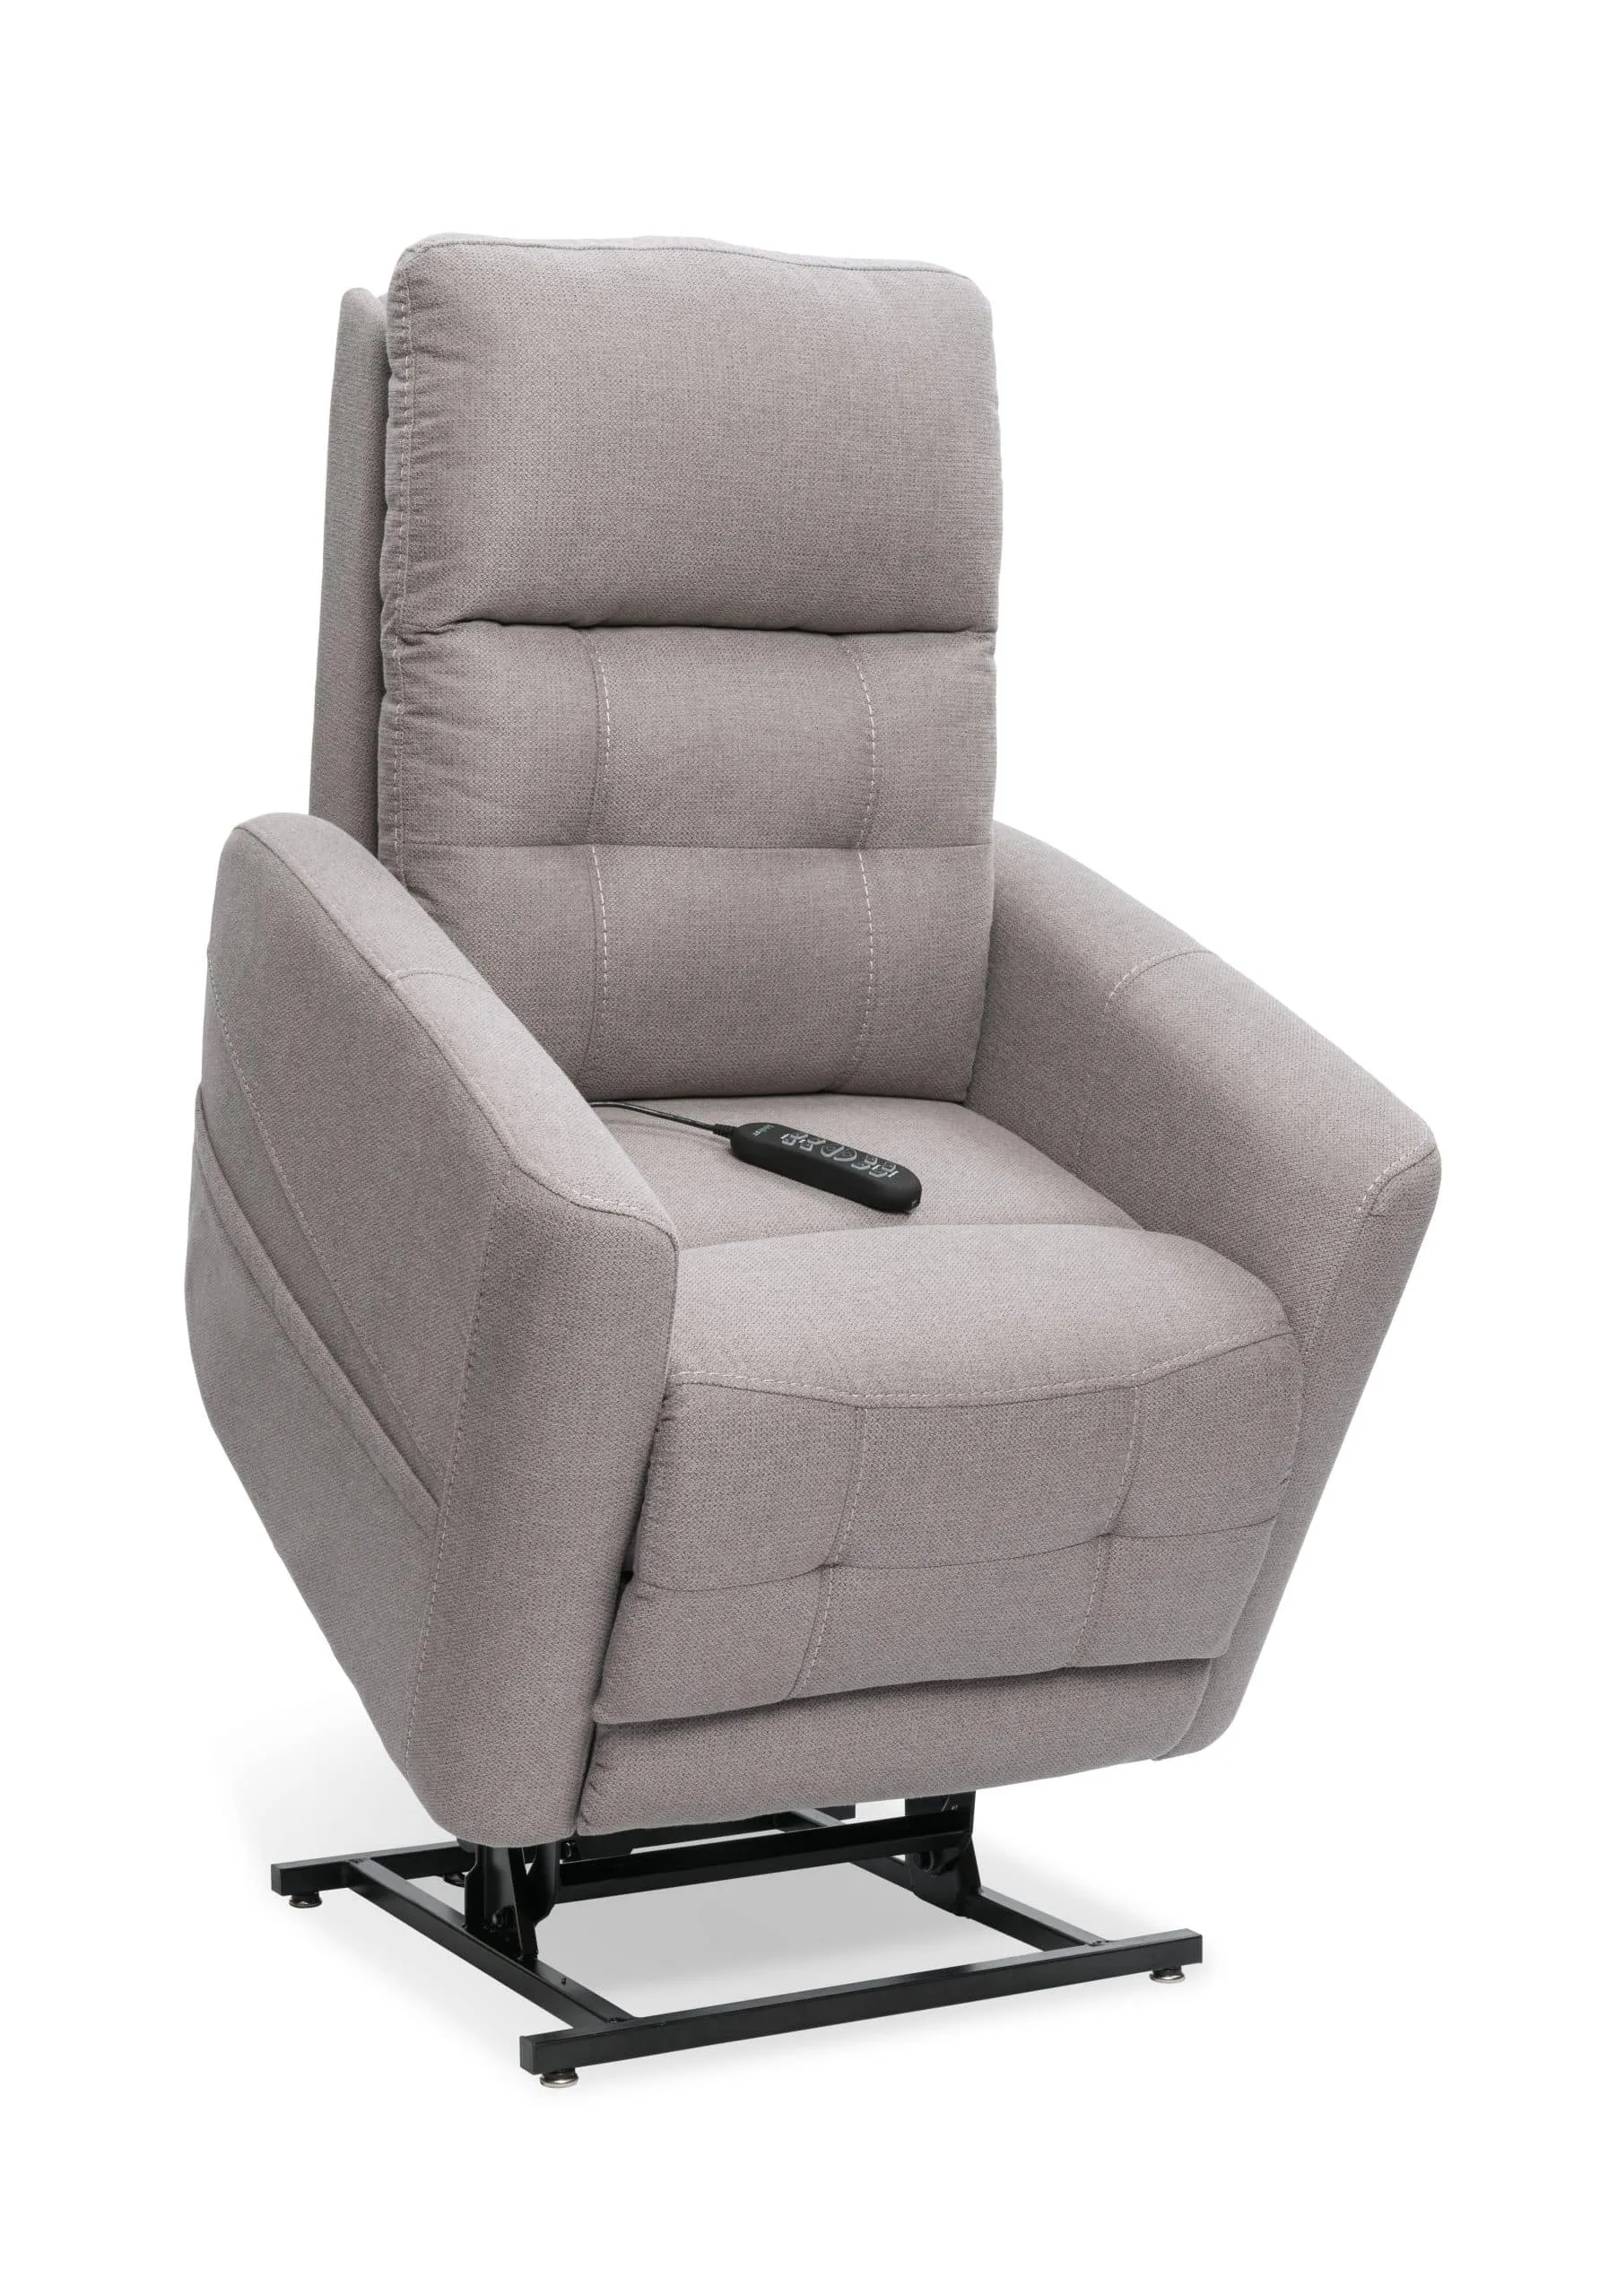 Pride VivaLift Tranquil Lift Chair PLR935 - Infinite Positions